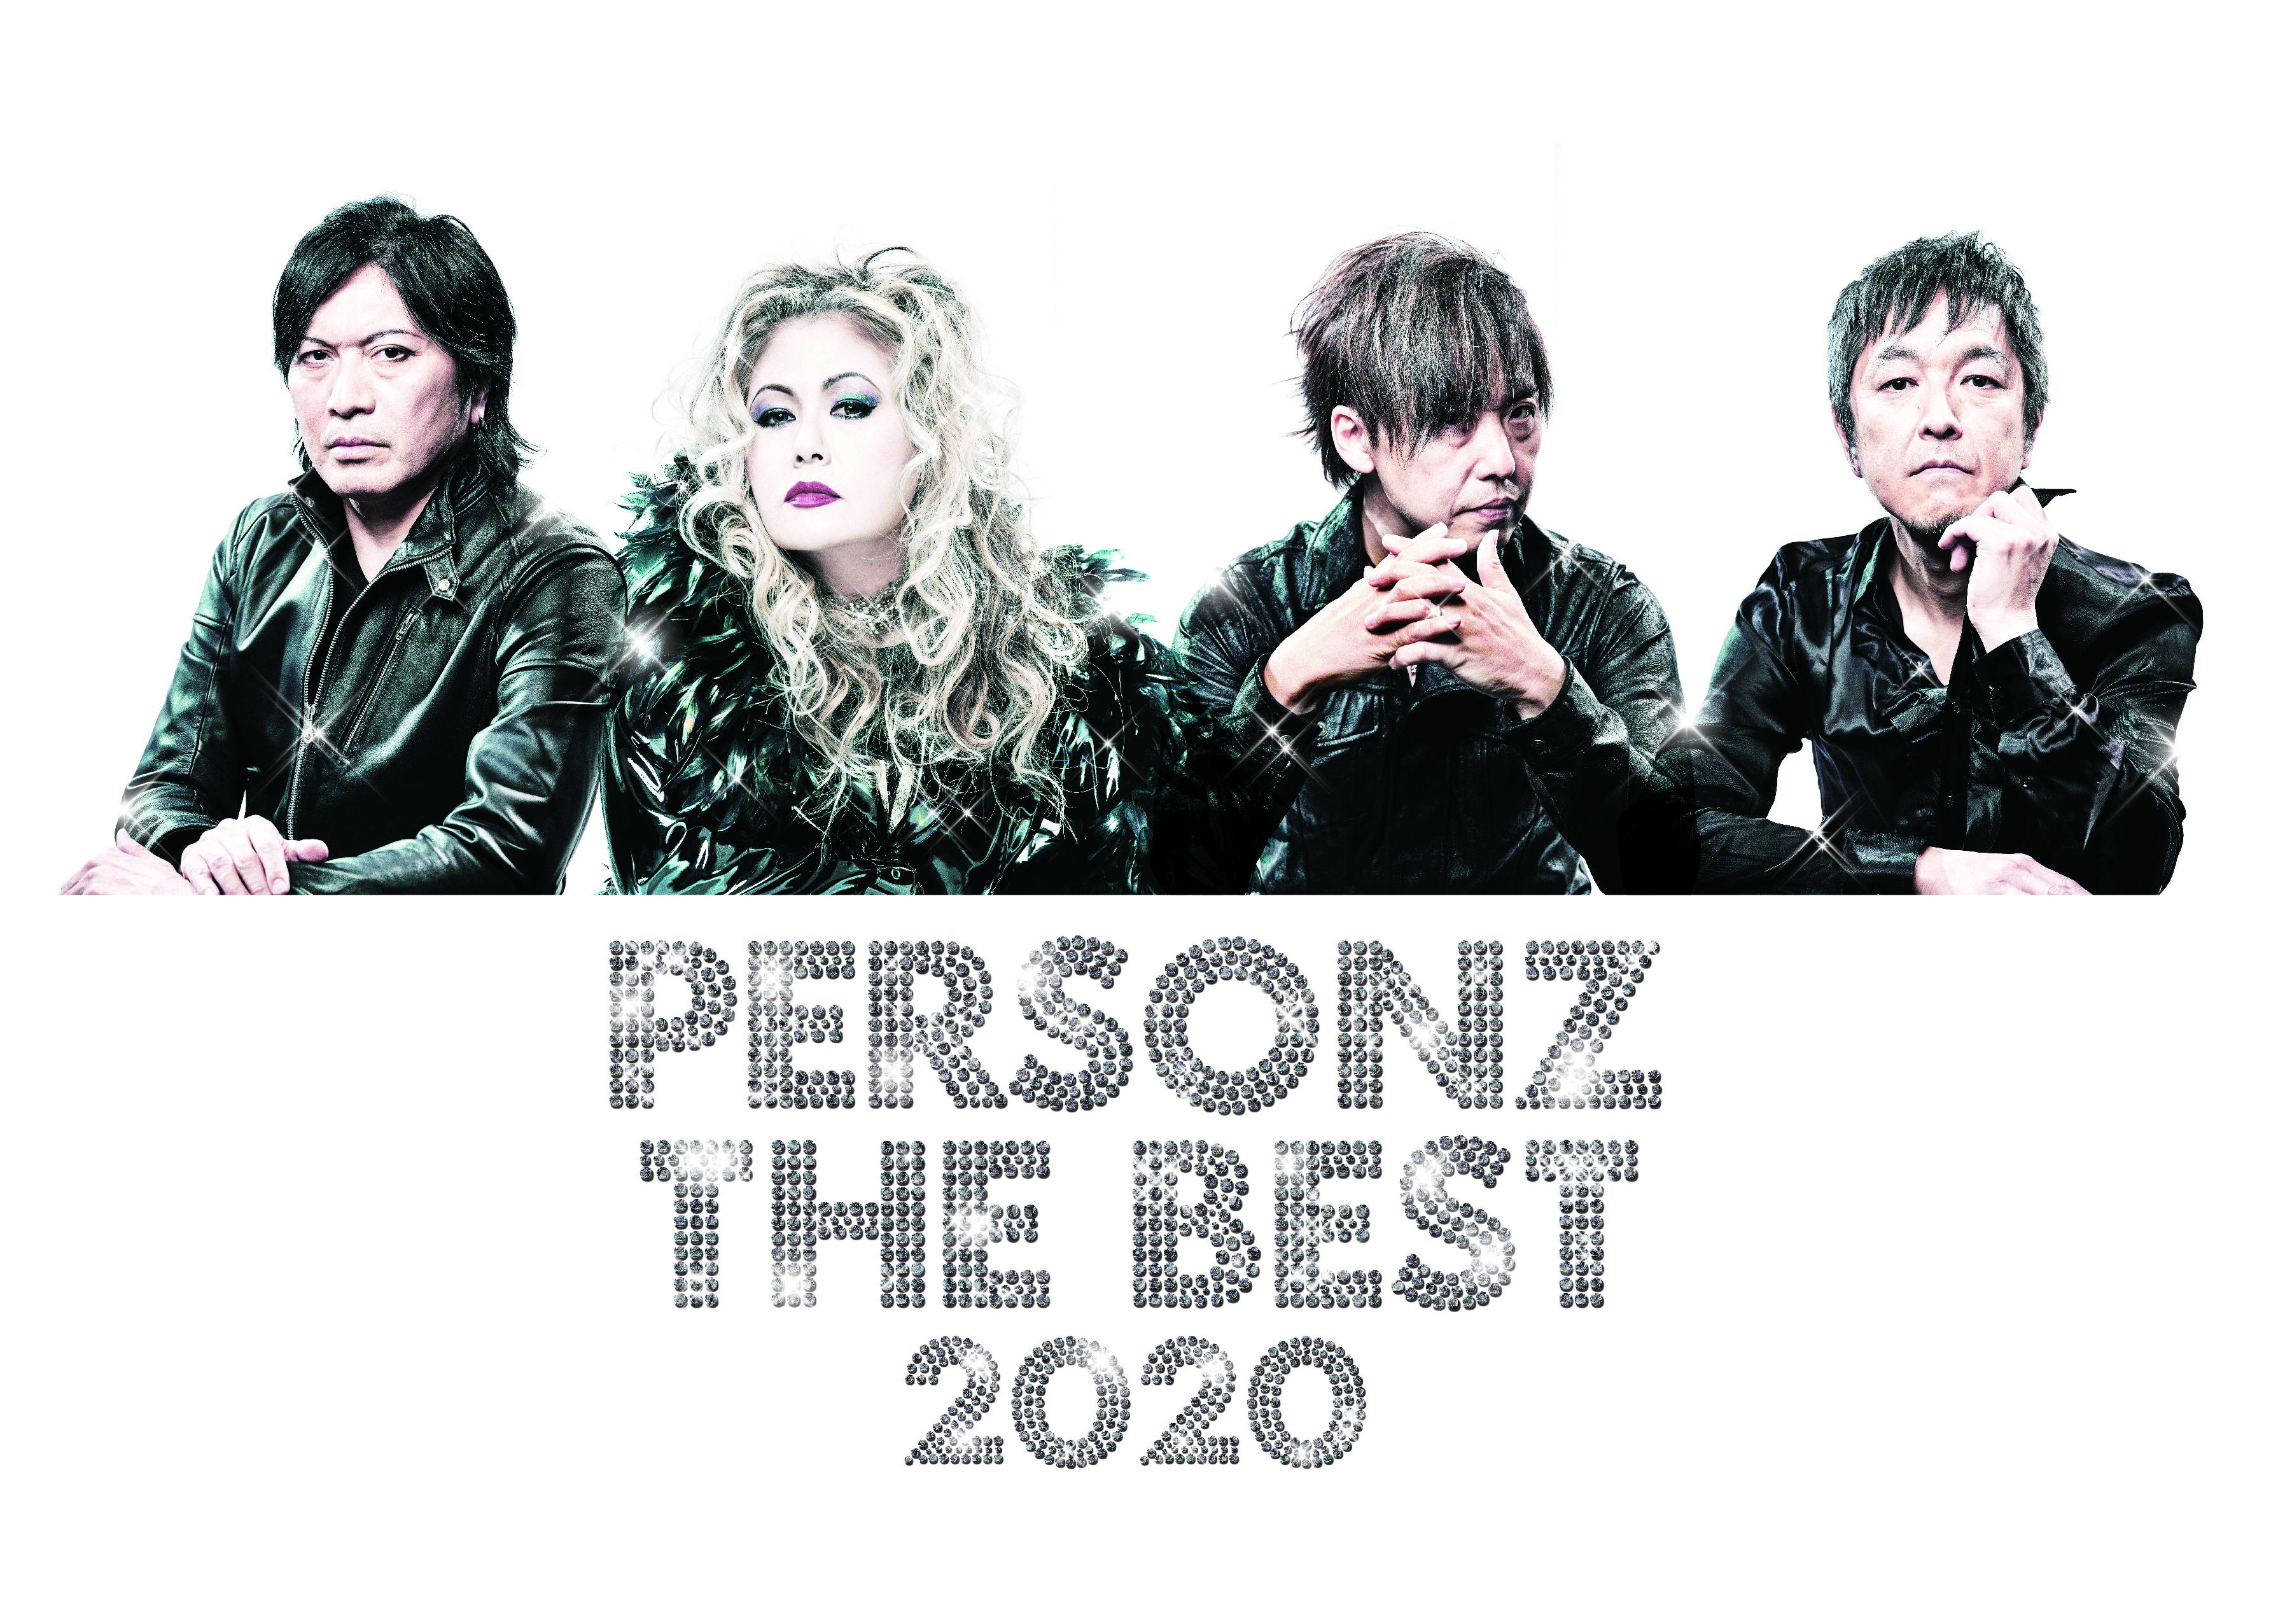 PERSONZ35ǯǰ
PERSONZ THE BEST 2020